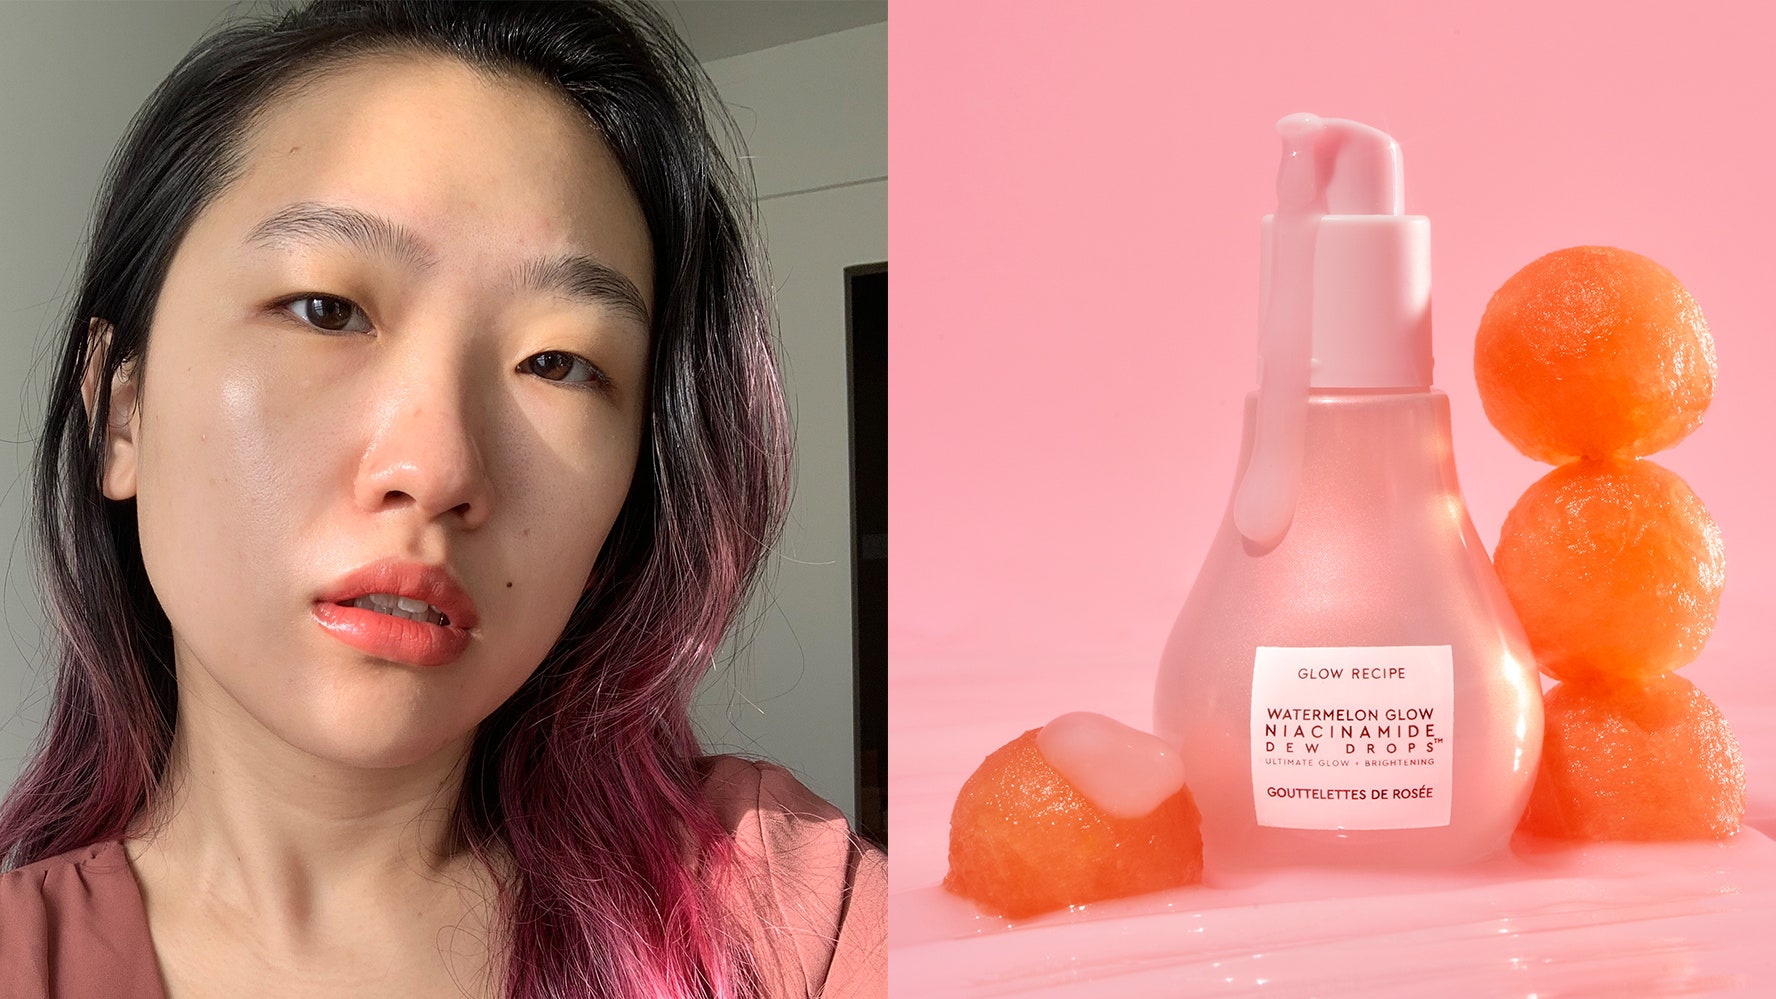 Las gotas de rocío de Glow Recipe transforman mi piel apagada e irritada